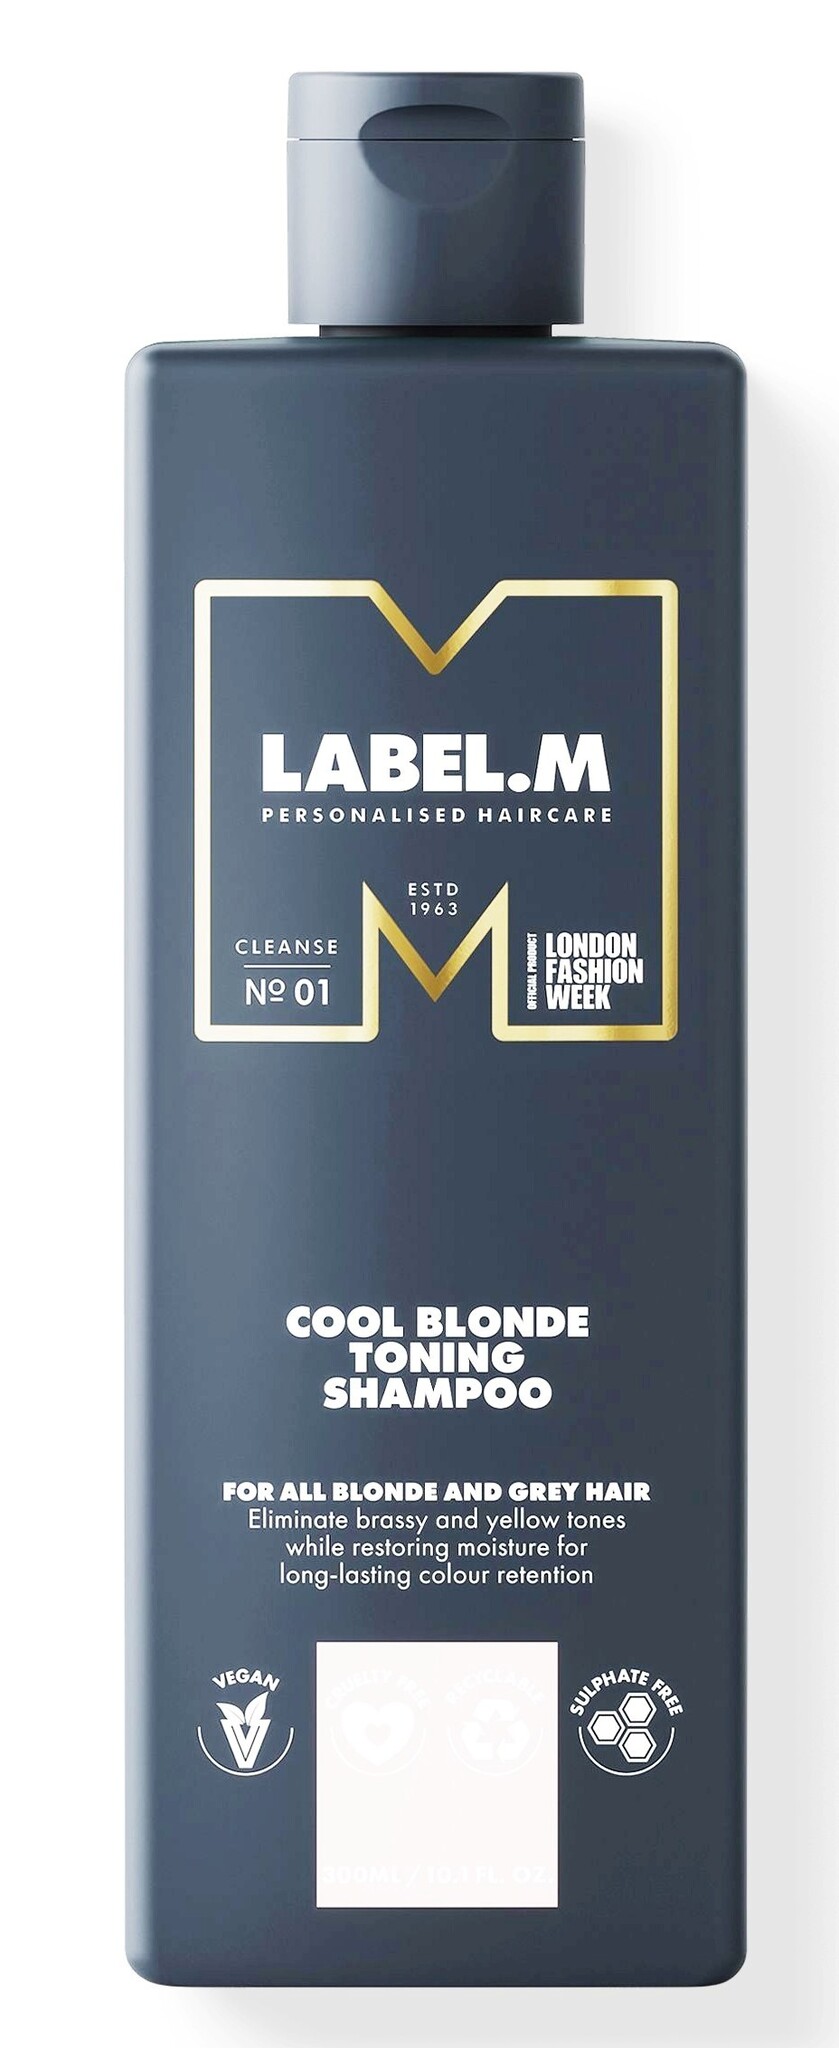 Label.m Cool Blonde Toning Shampoo 300ml